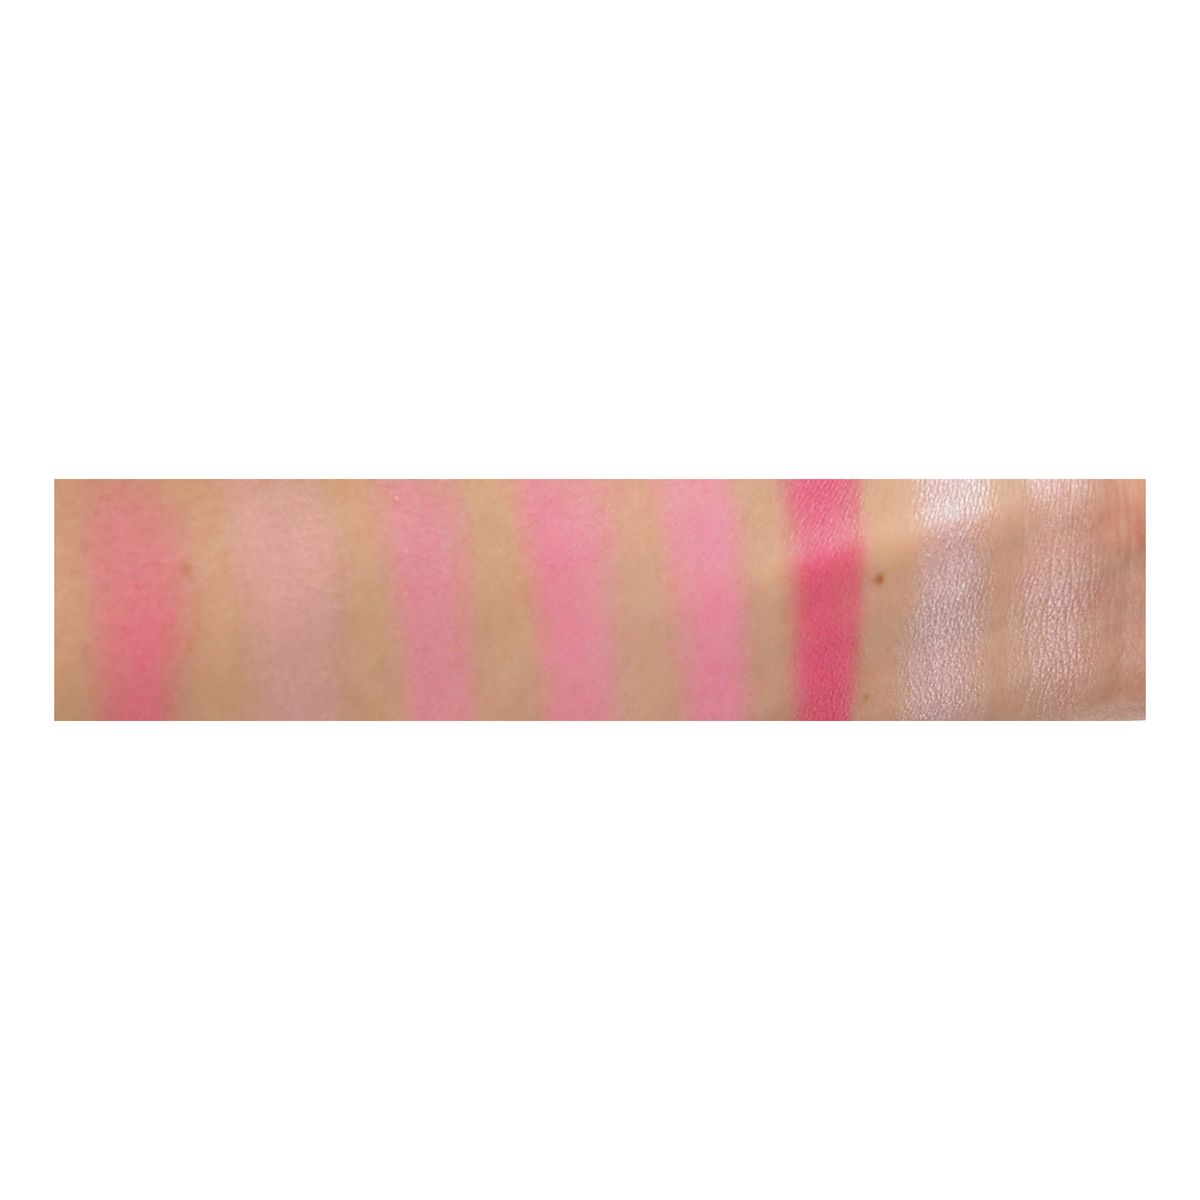 Makeup Revolution Ultra Blush and Contour Palette All About Pink Paleta Róży Do Policzków 13g